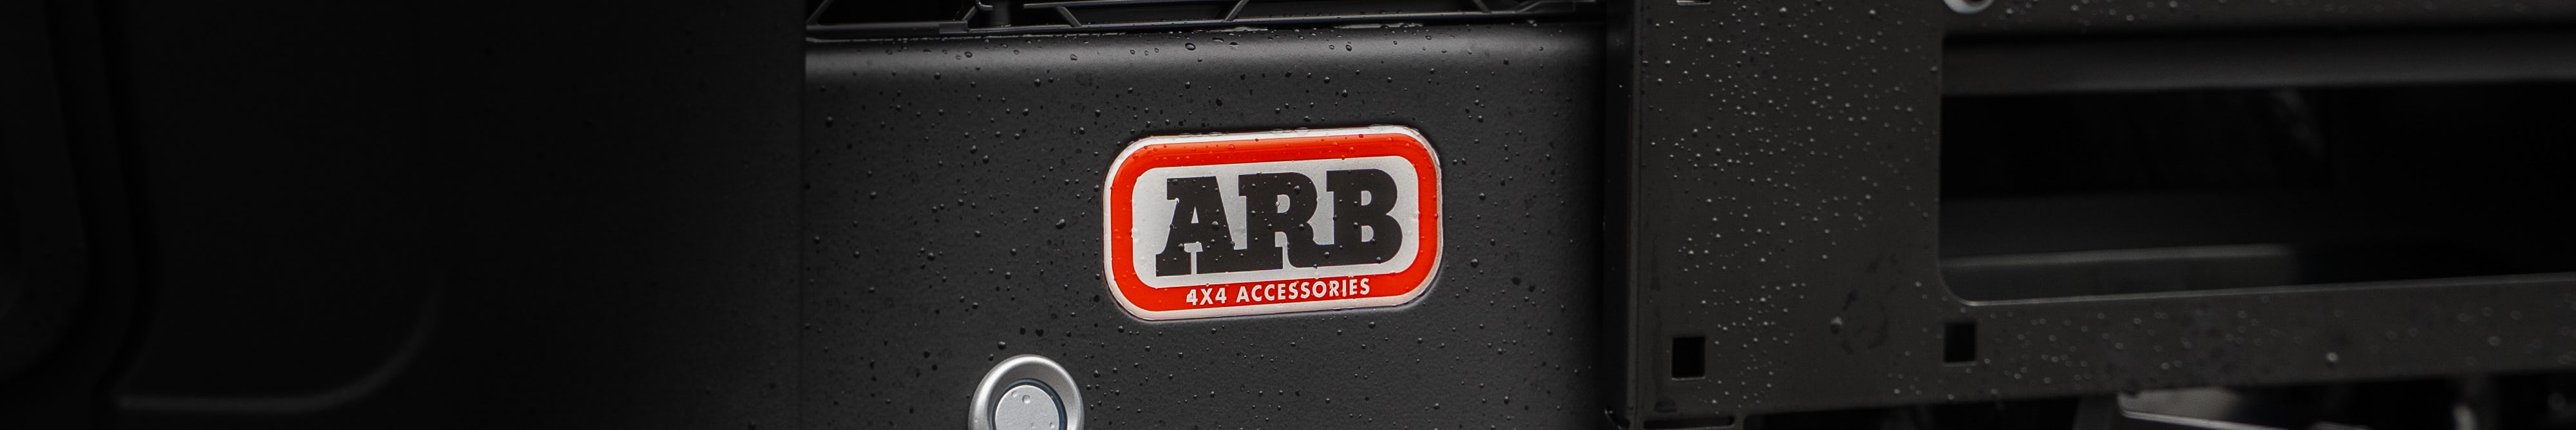 Close up of ARB 4x4 Accessories on Isuzu Dmax Fitout